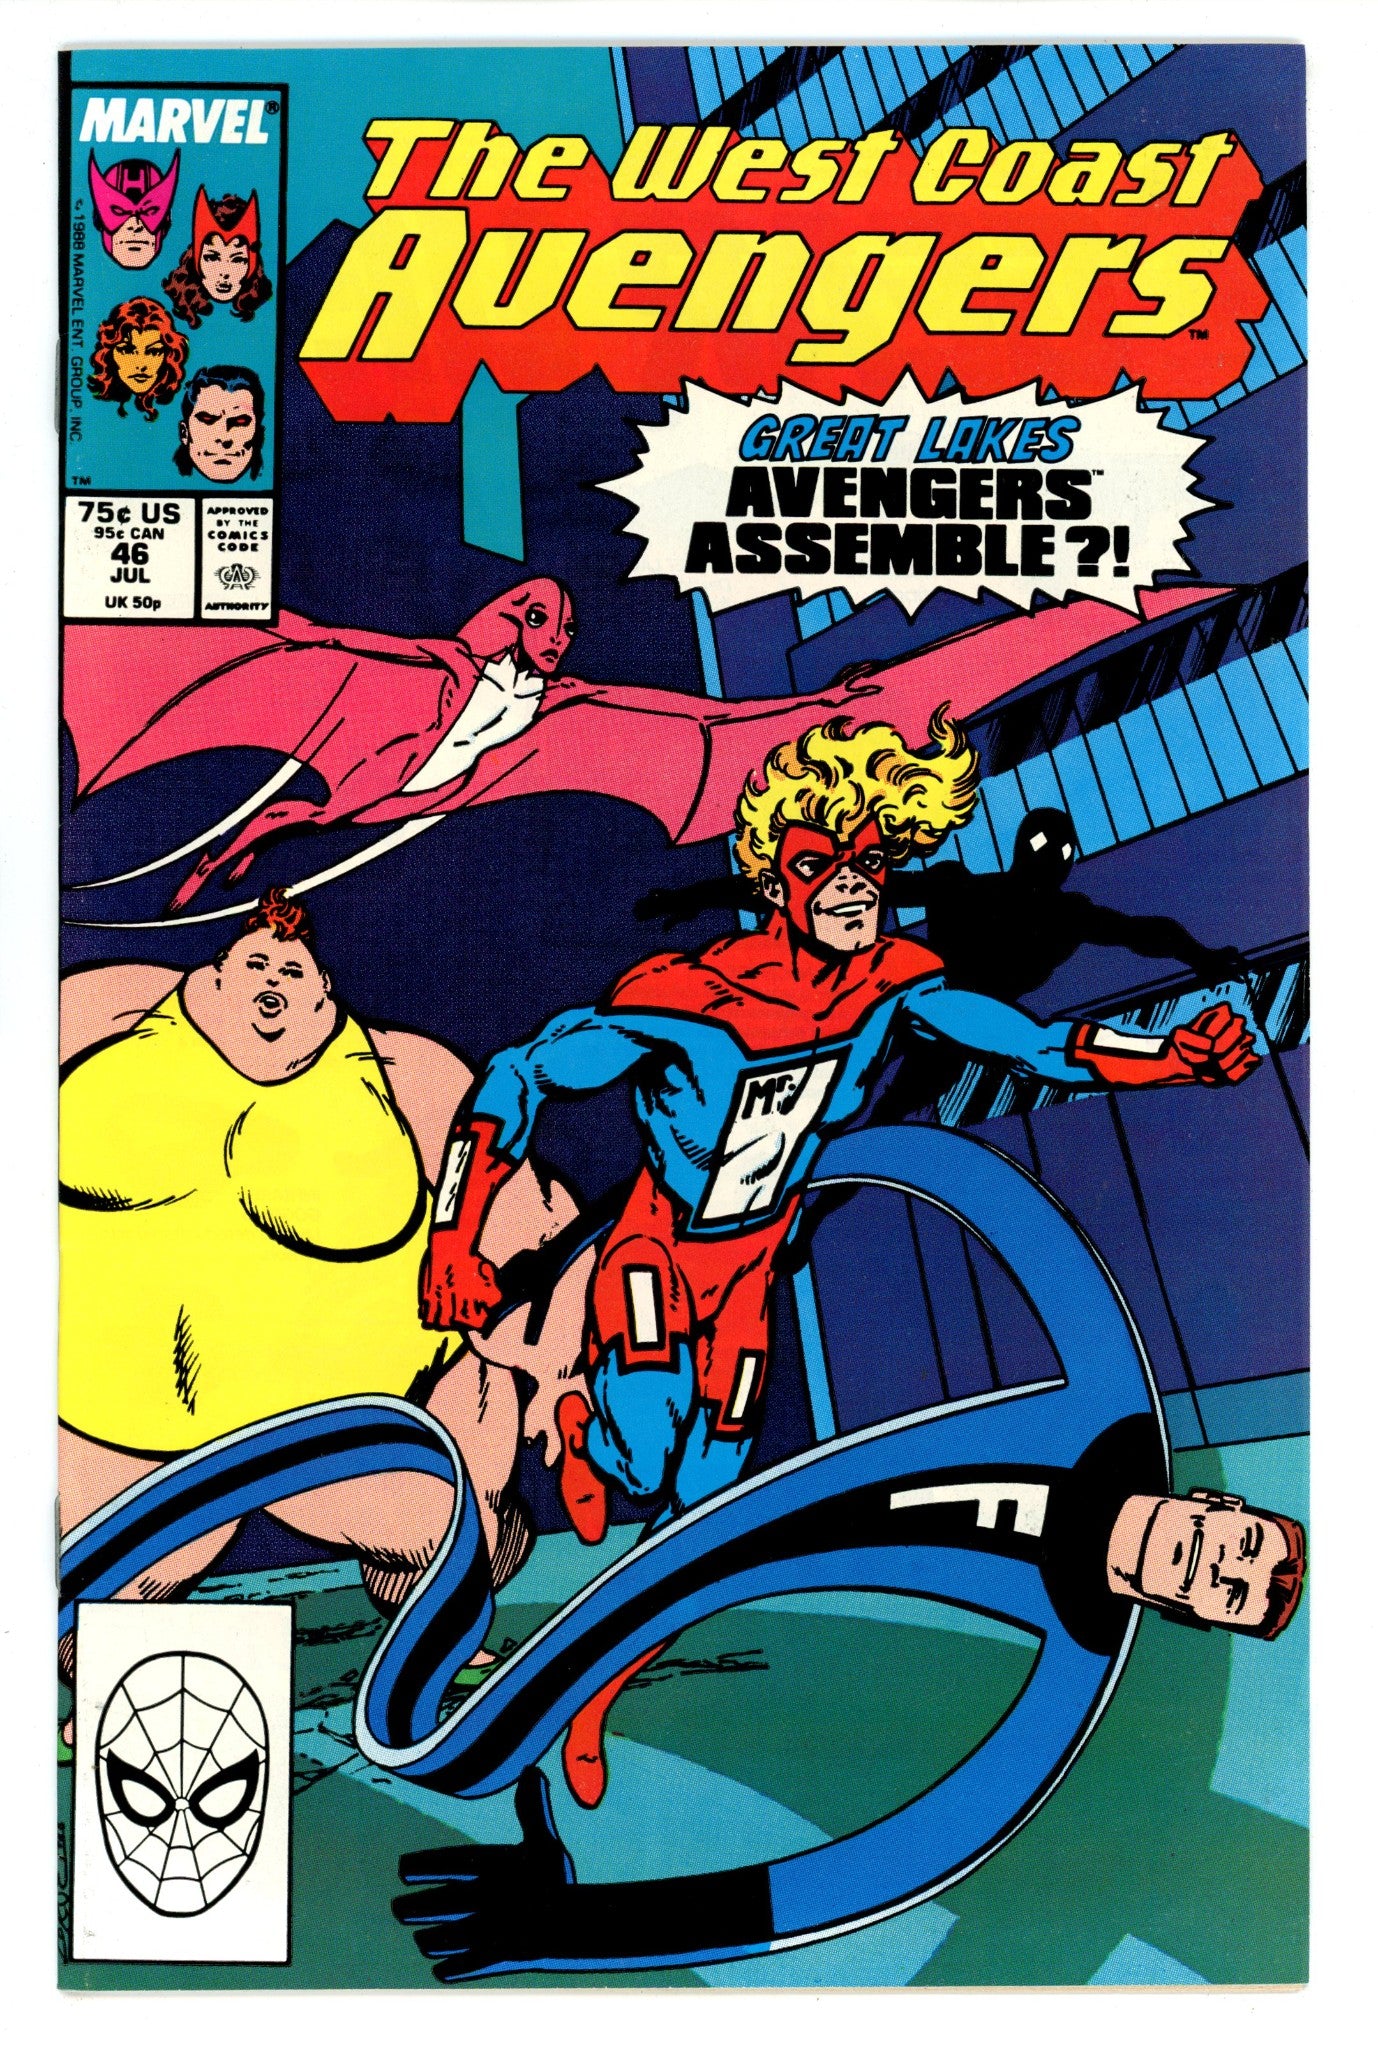 West Coast Avengers Vol 2 46 VF (8.0) (1989) 